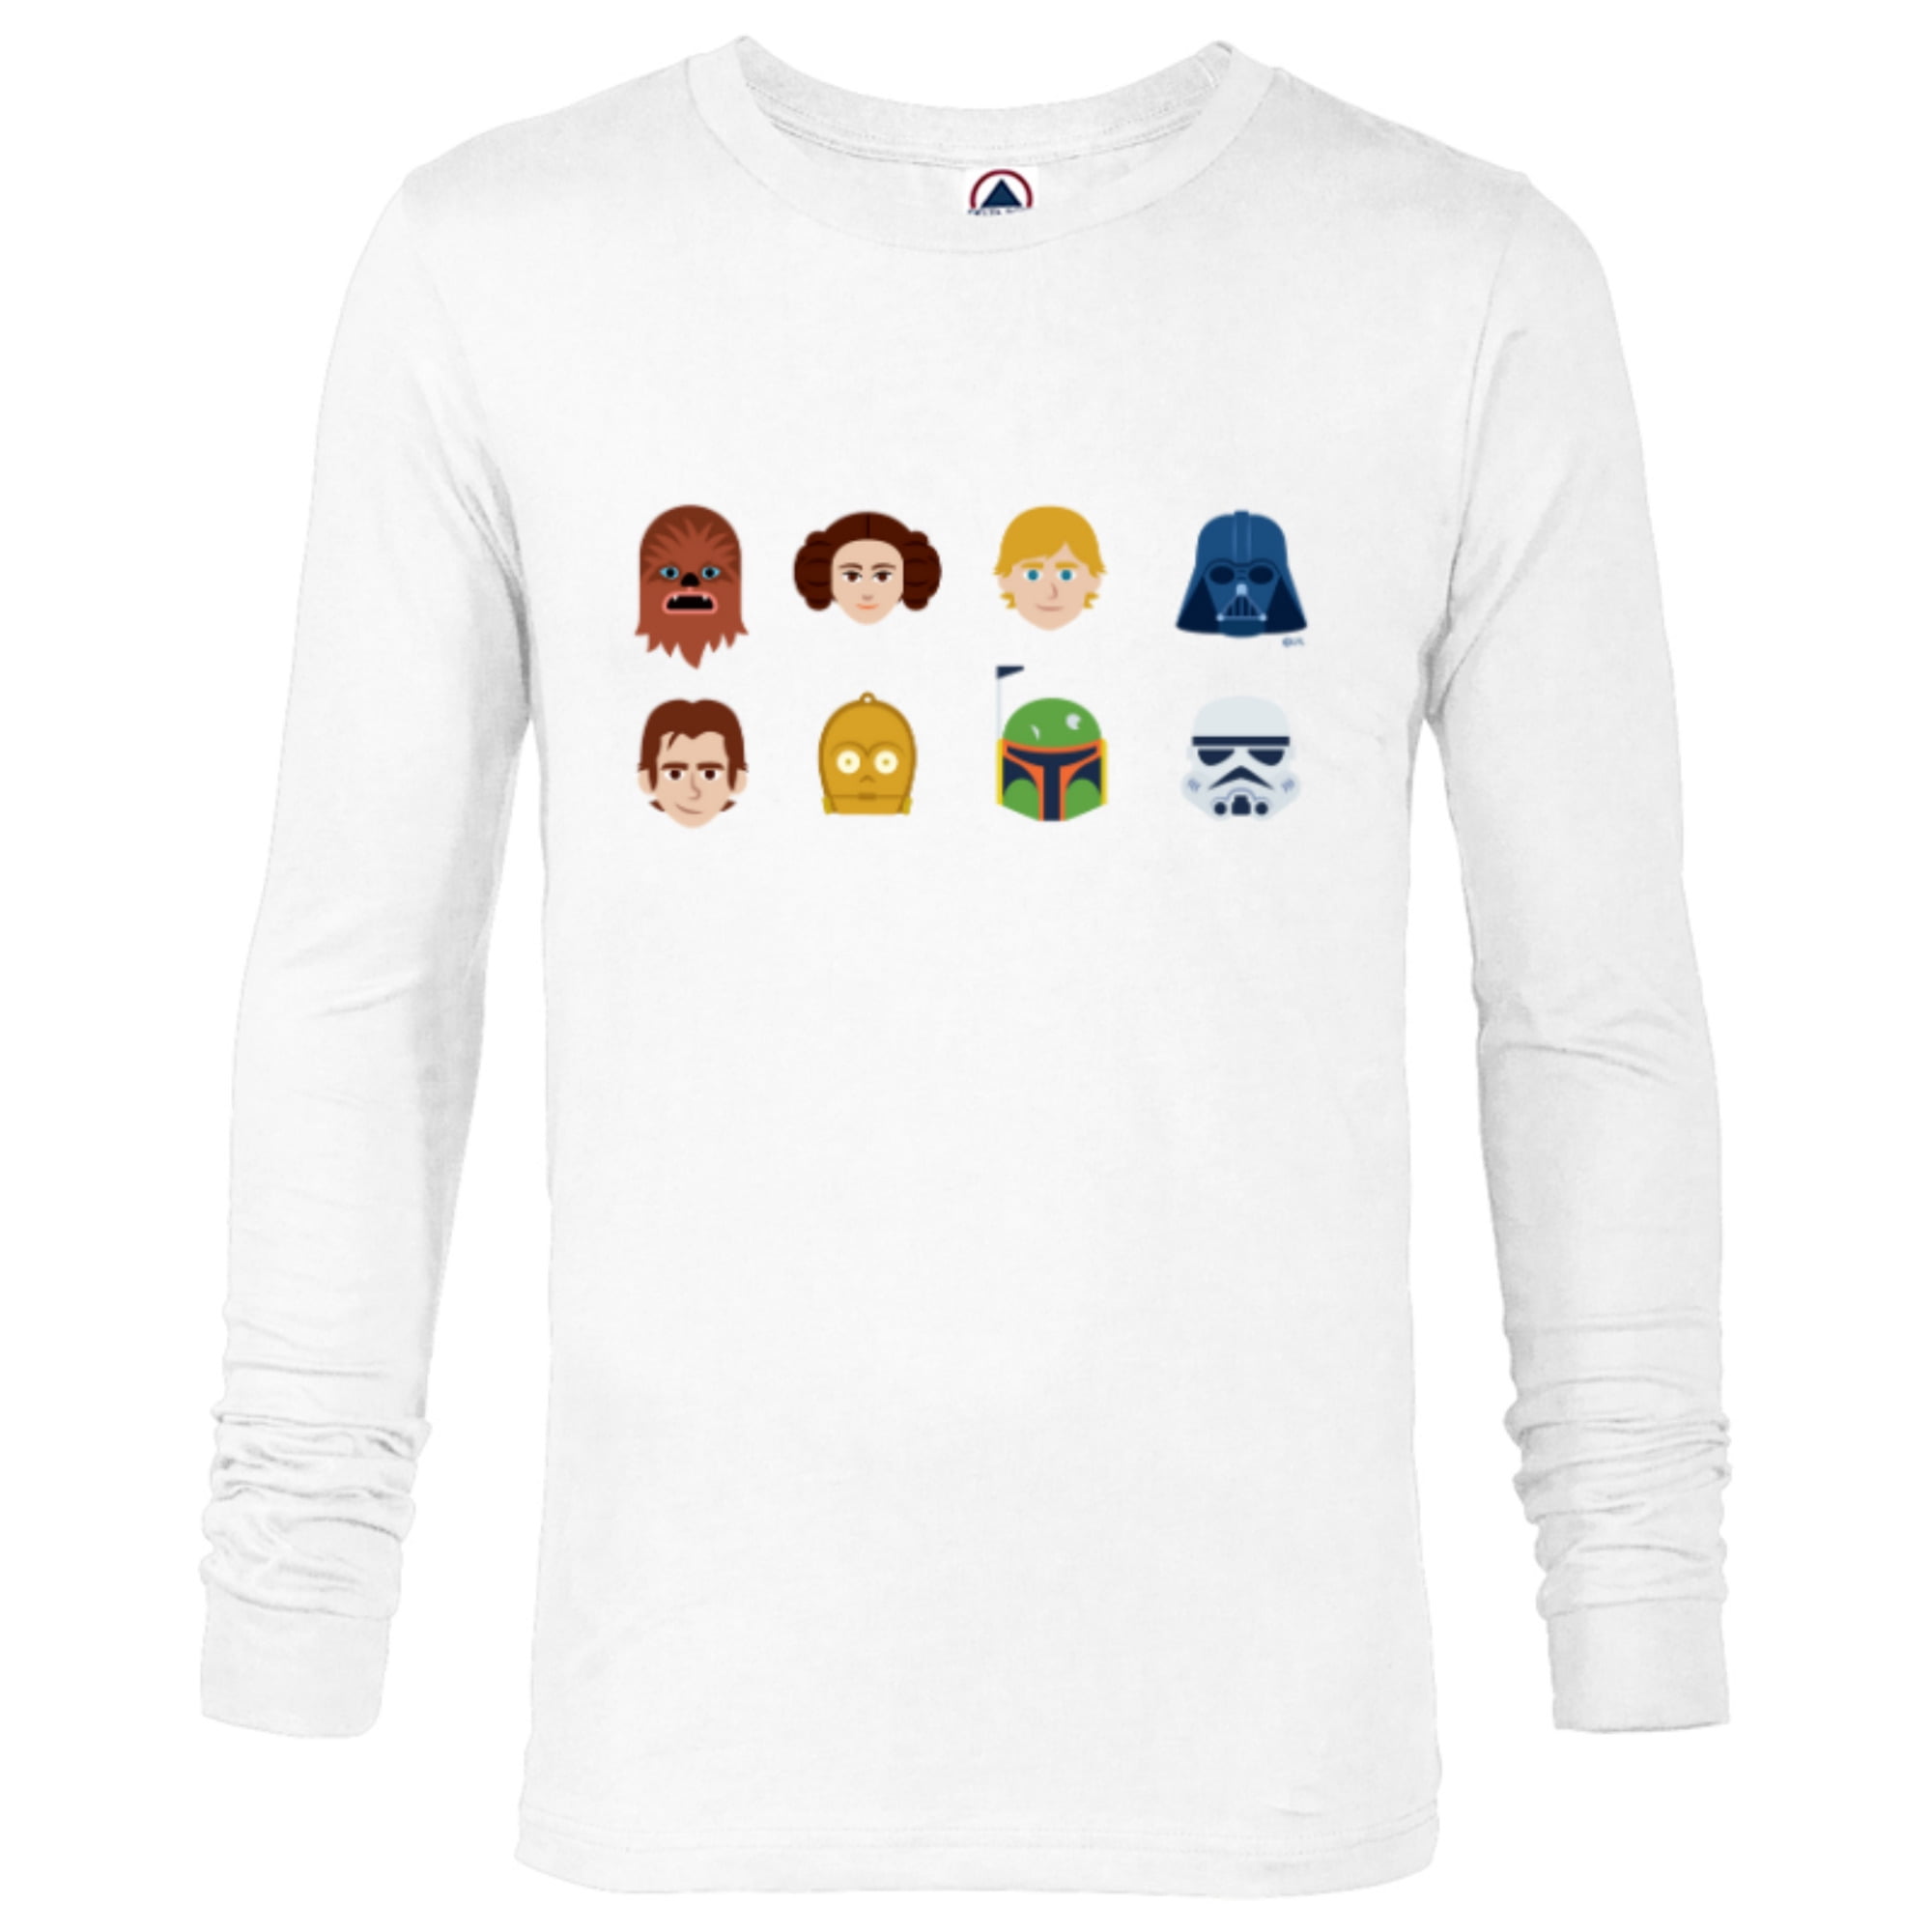 Star Wars Original Trilogy Color Character Long T-Shirt for Men - - Walmart.com